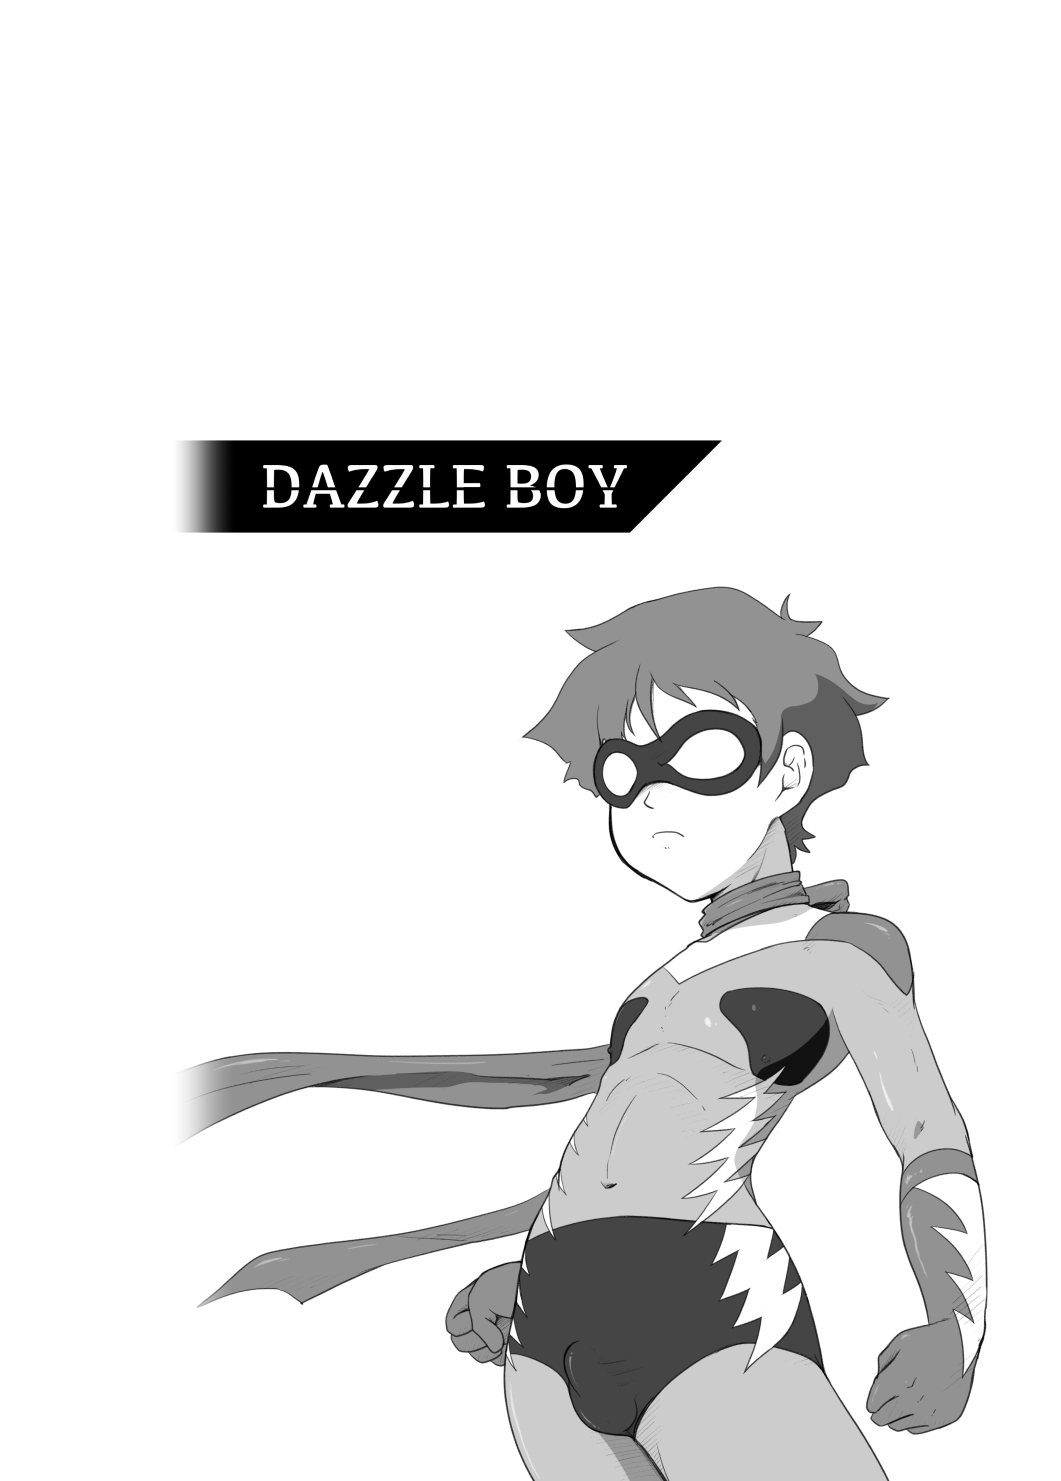 DAZZLE BOY